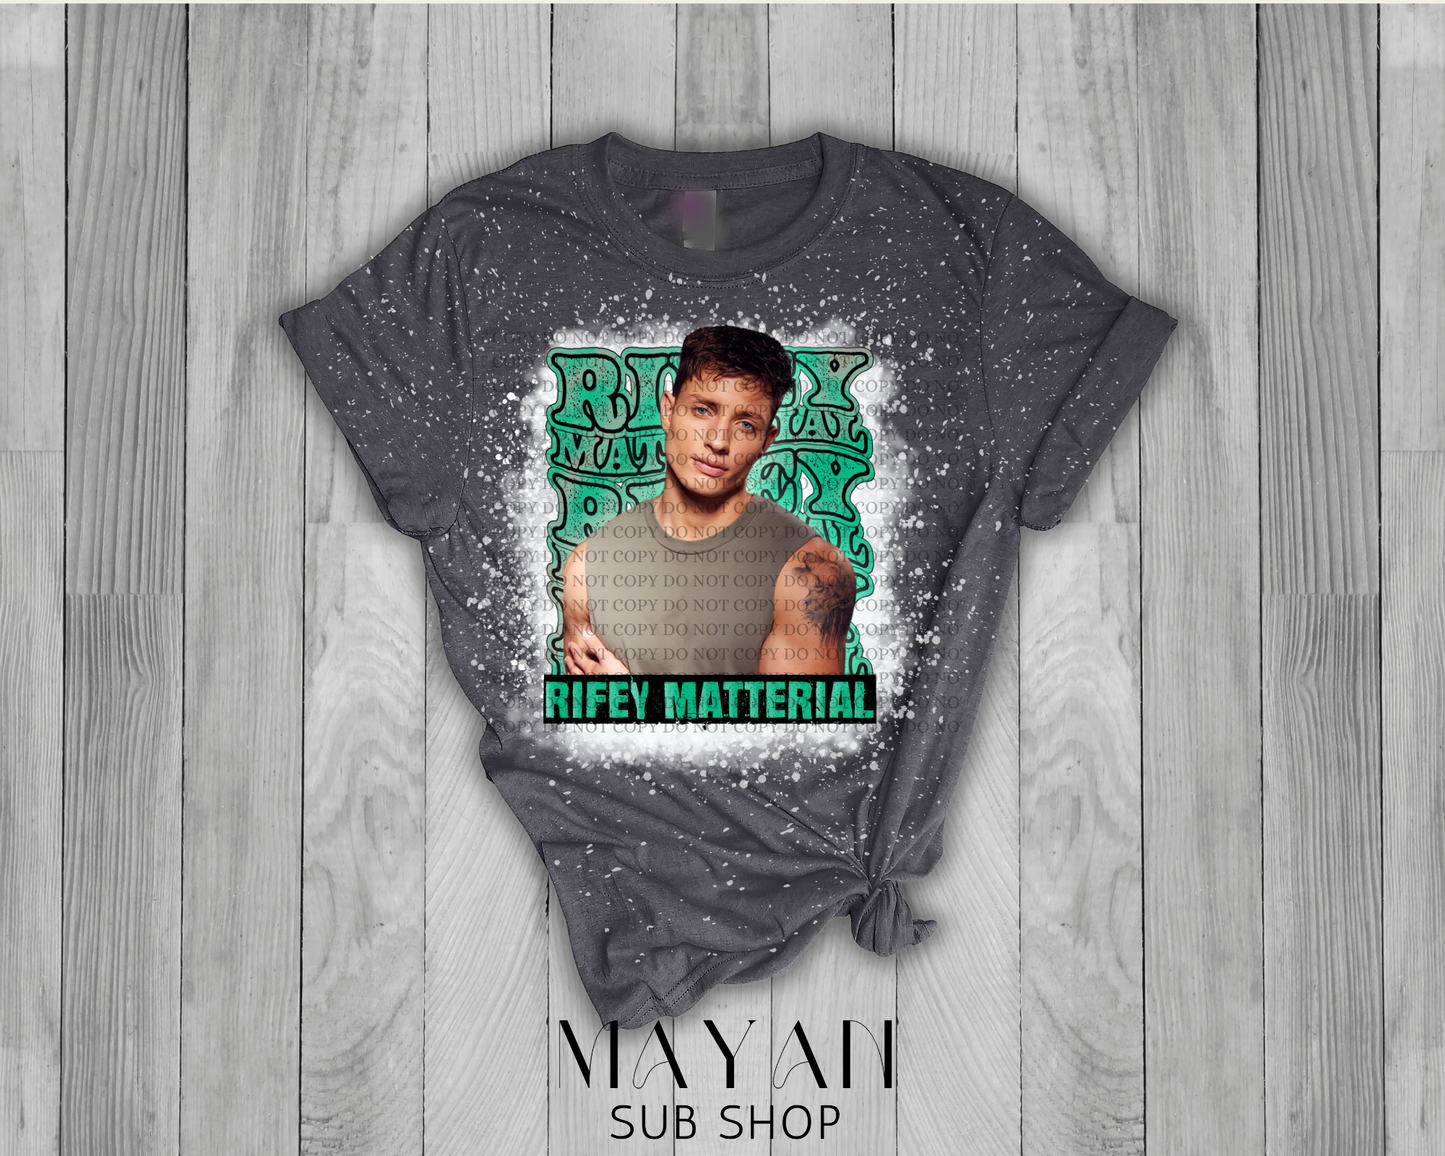 Riffey Matterial Green Bleached Shirt - Mayan Sub Shop